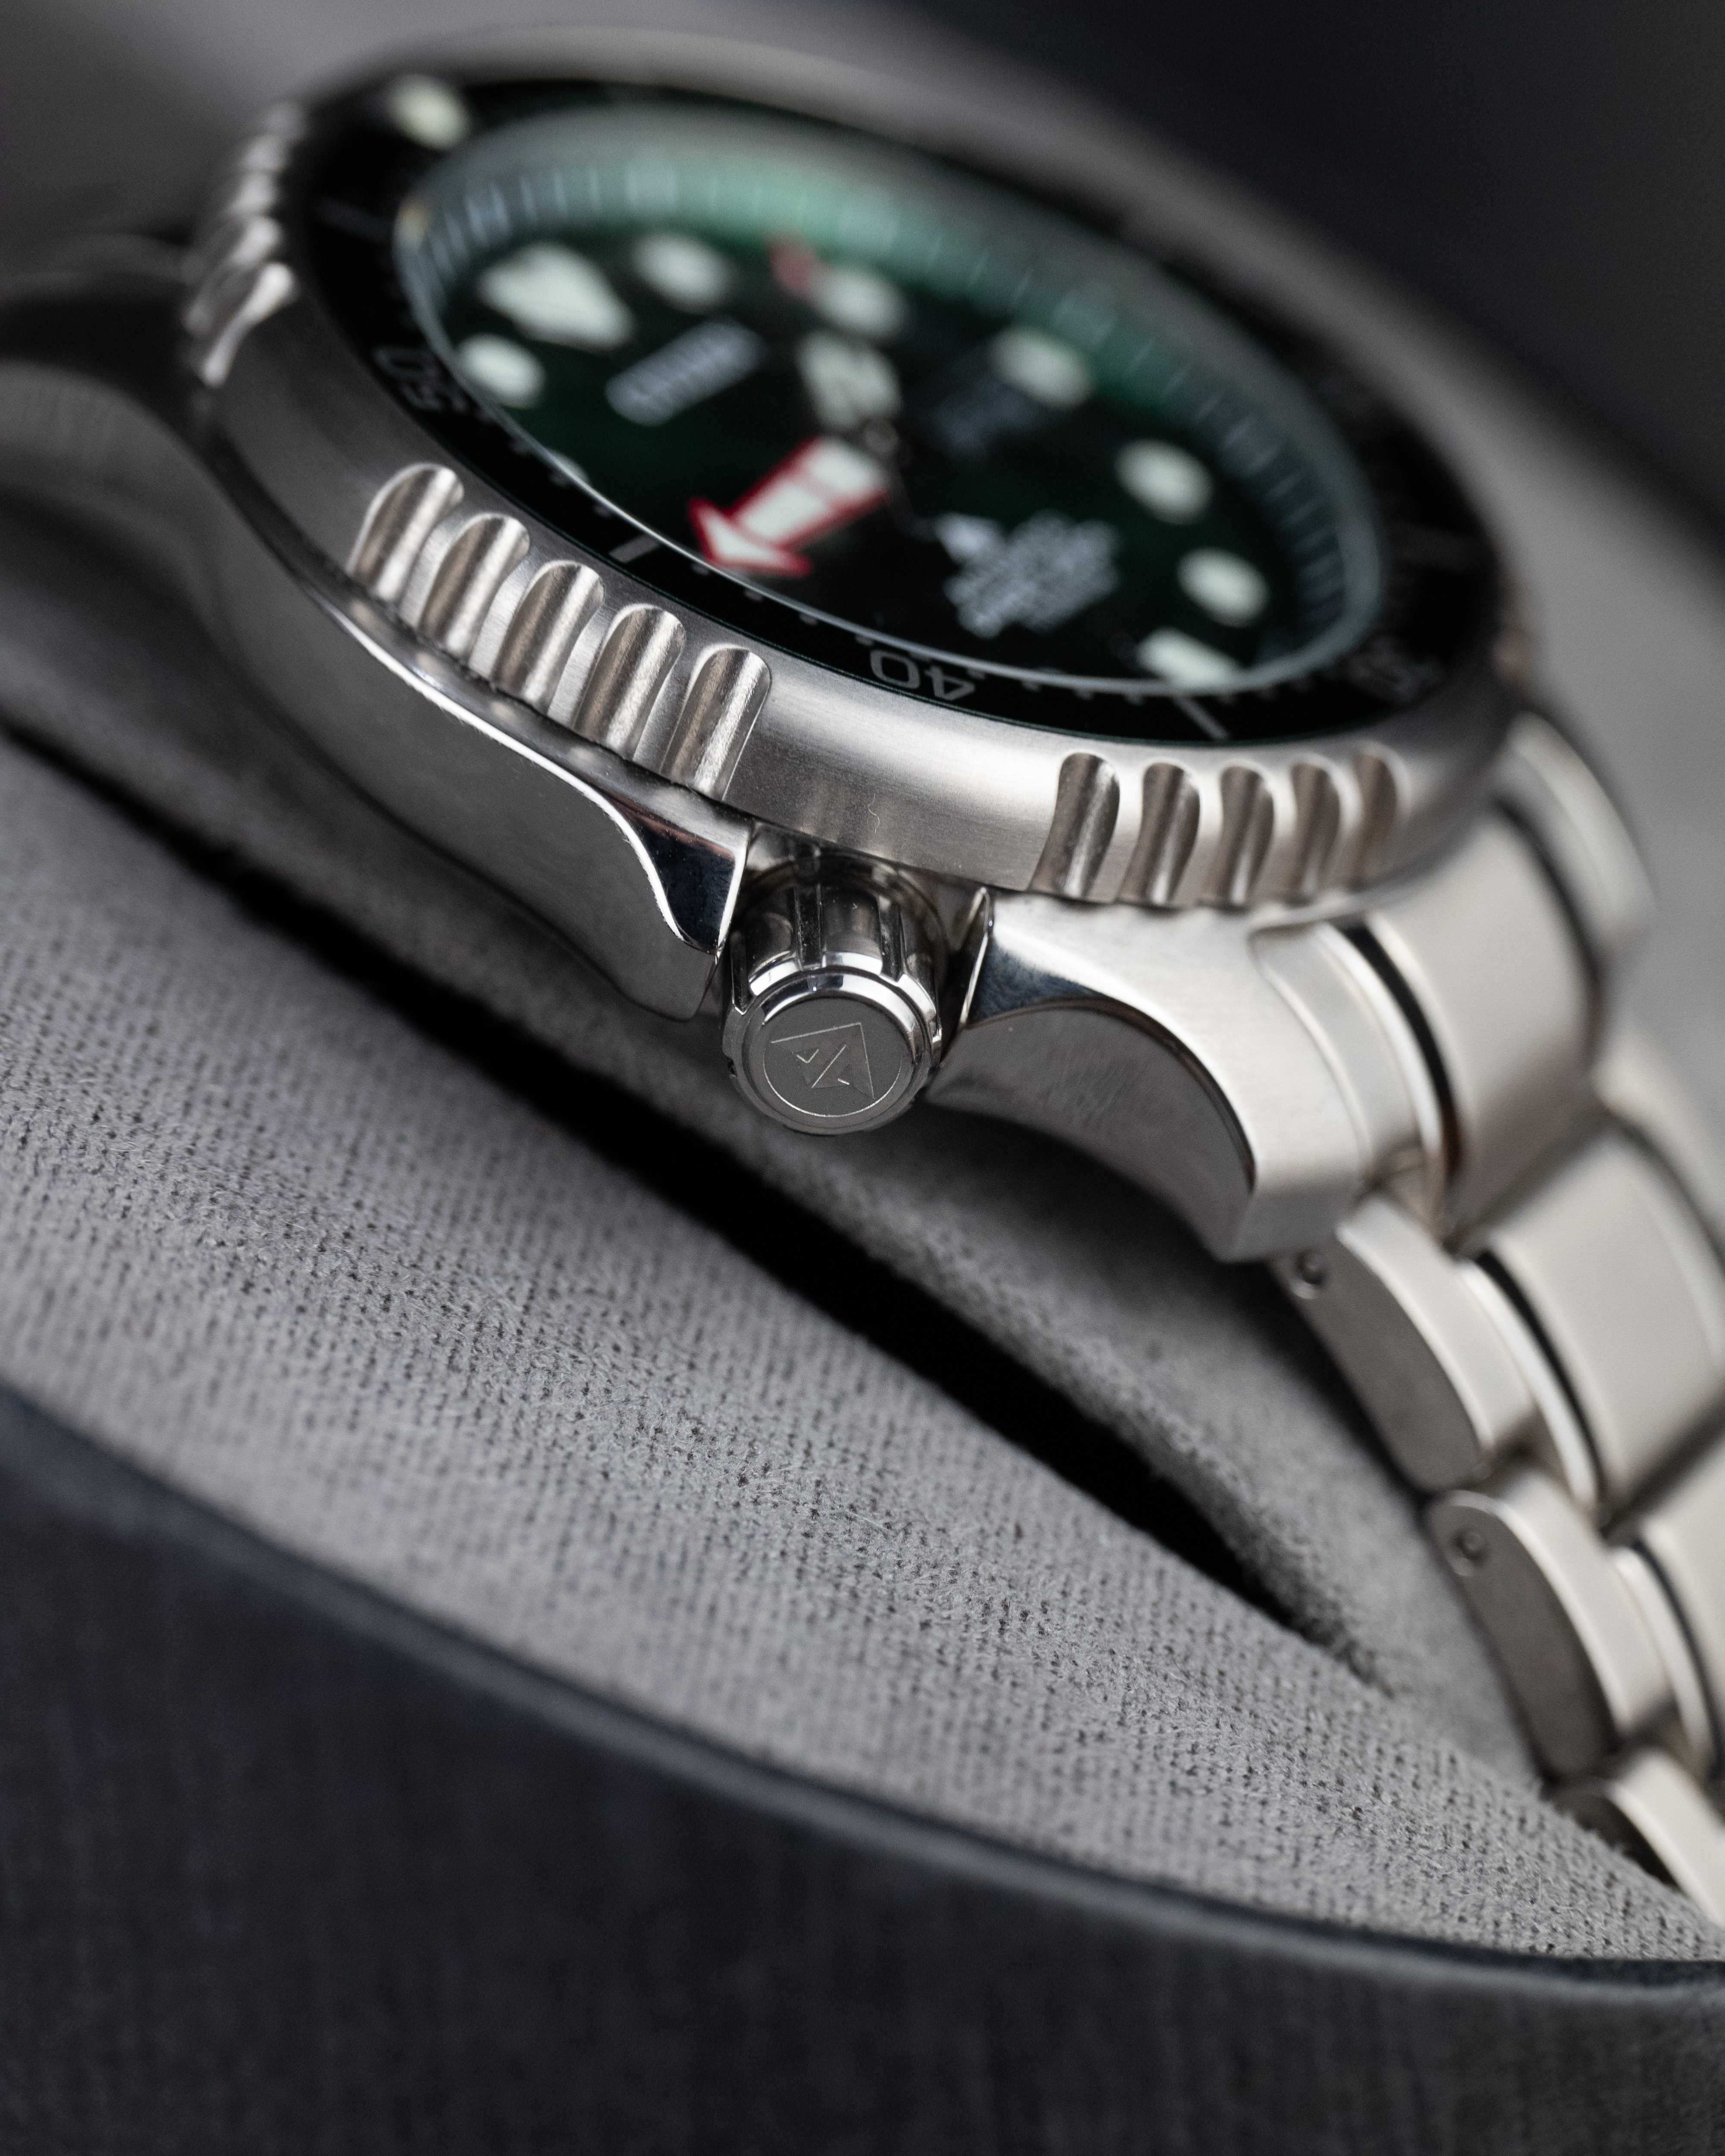 CITIZEN Promaster Diver Collection NY0100-50XE механичен часовник